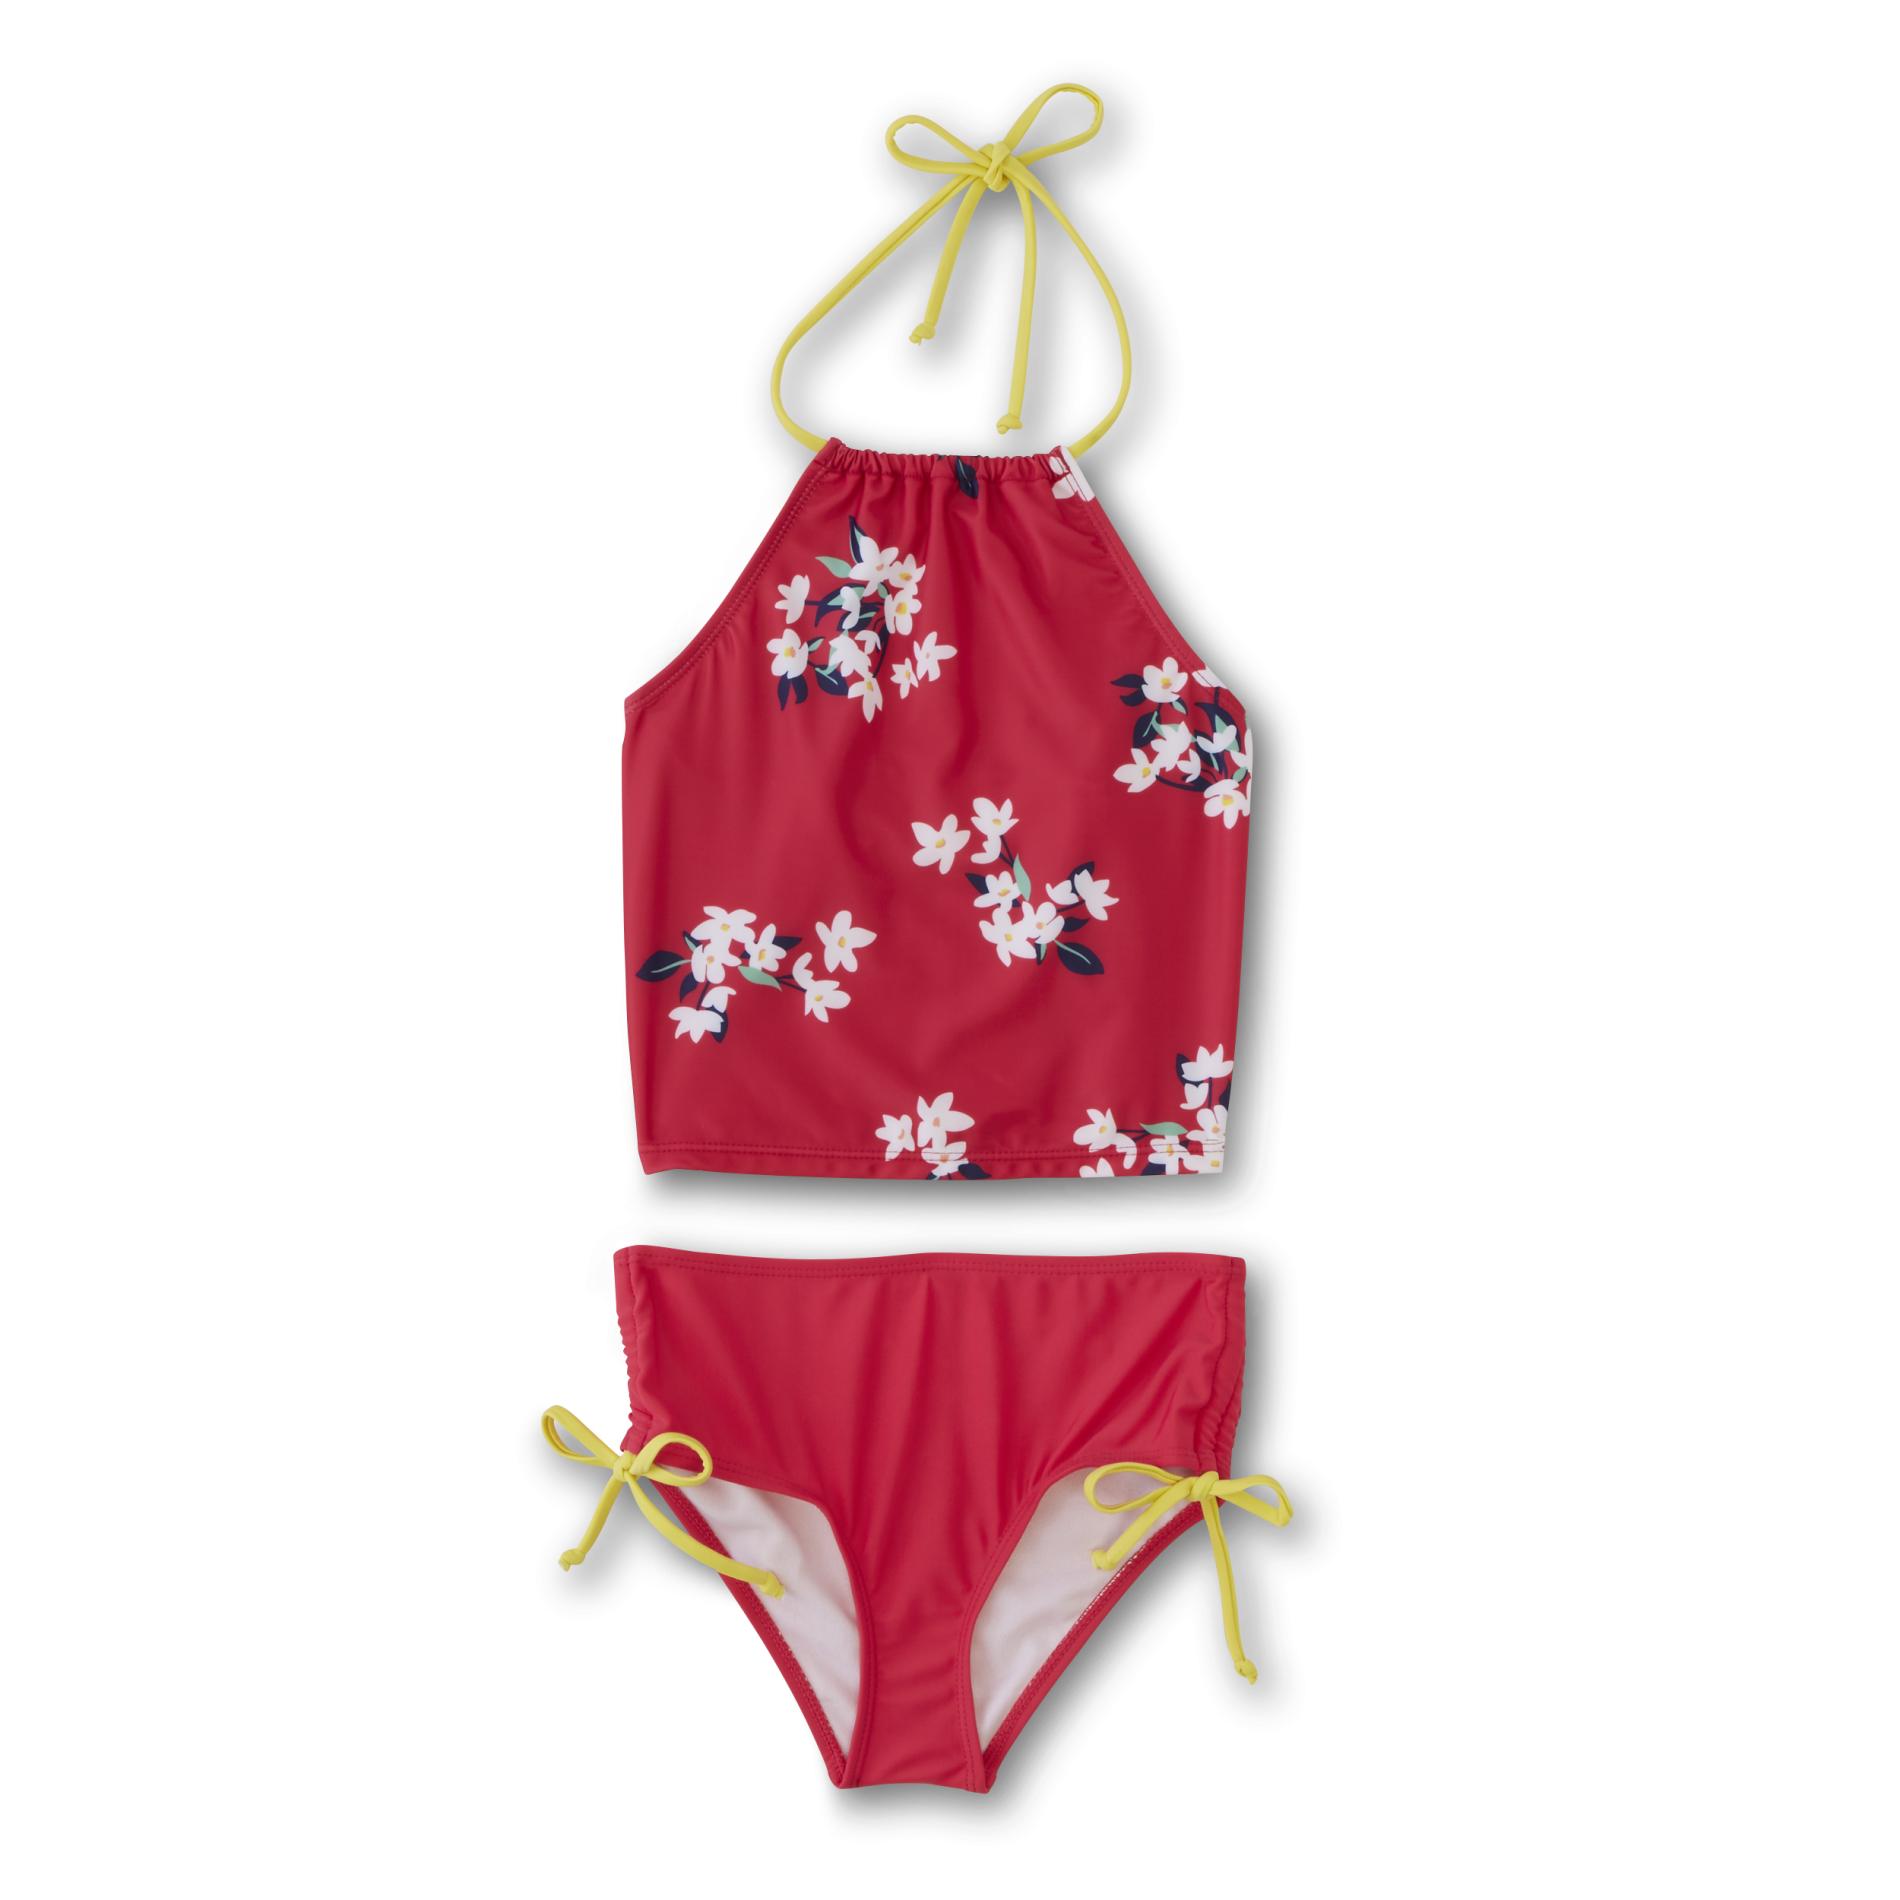 Simply Styled Girls' Halter Swim Top & Bikini Bottoms - Floral